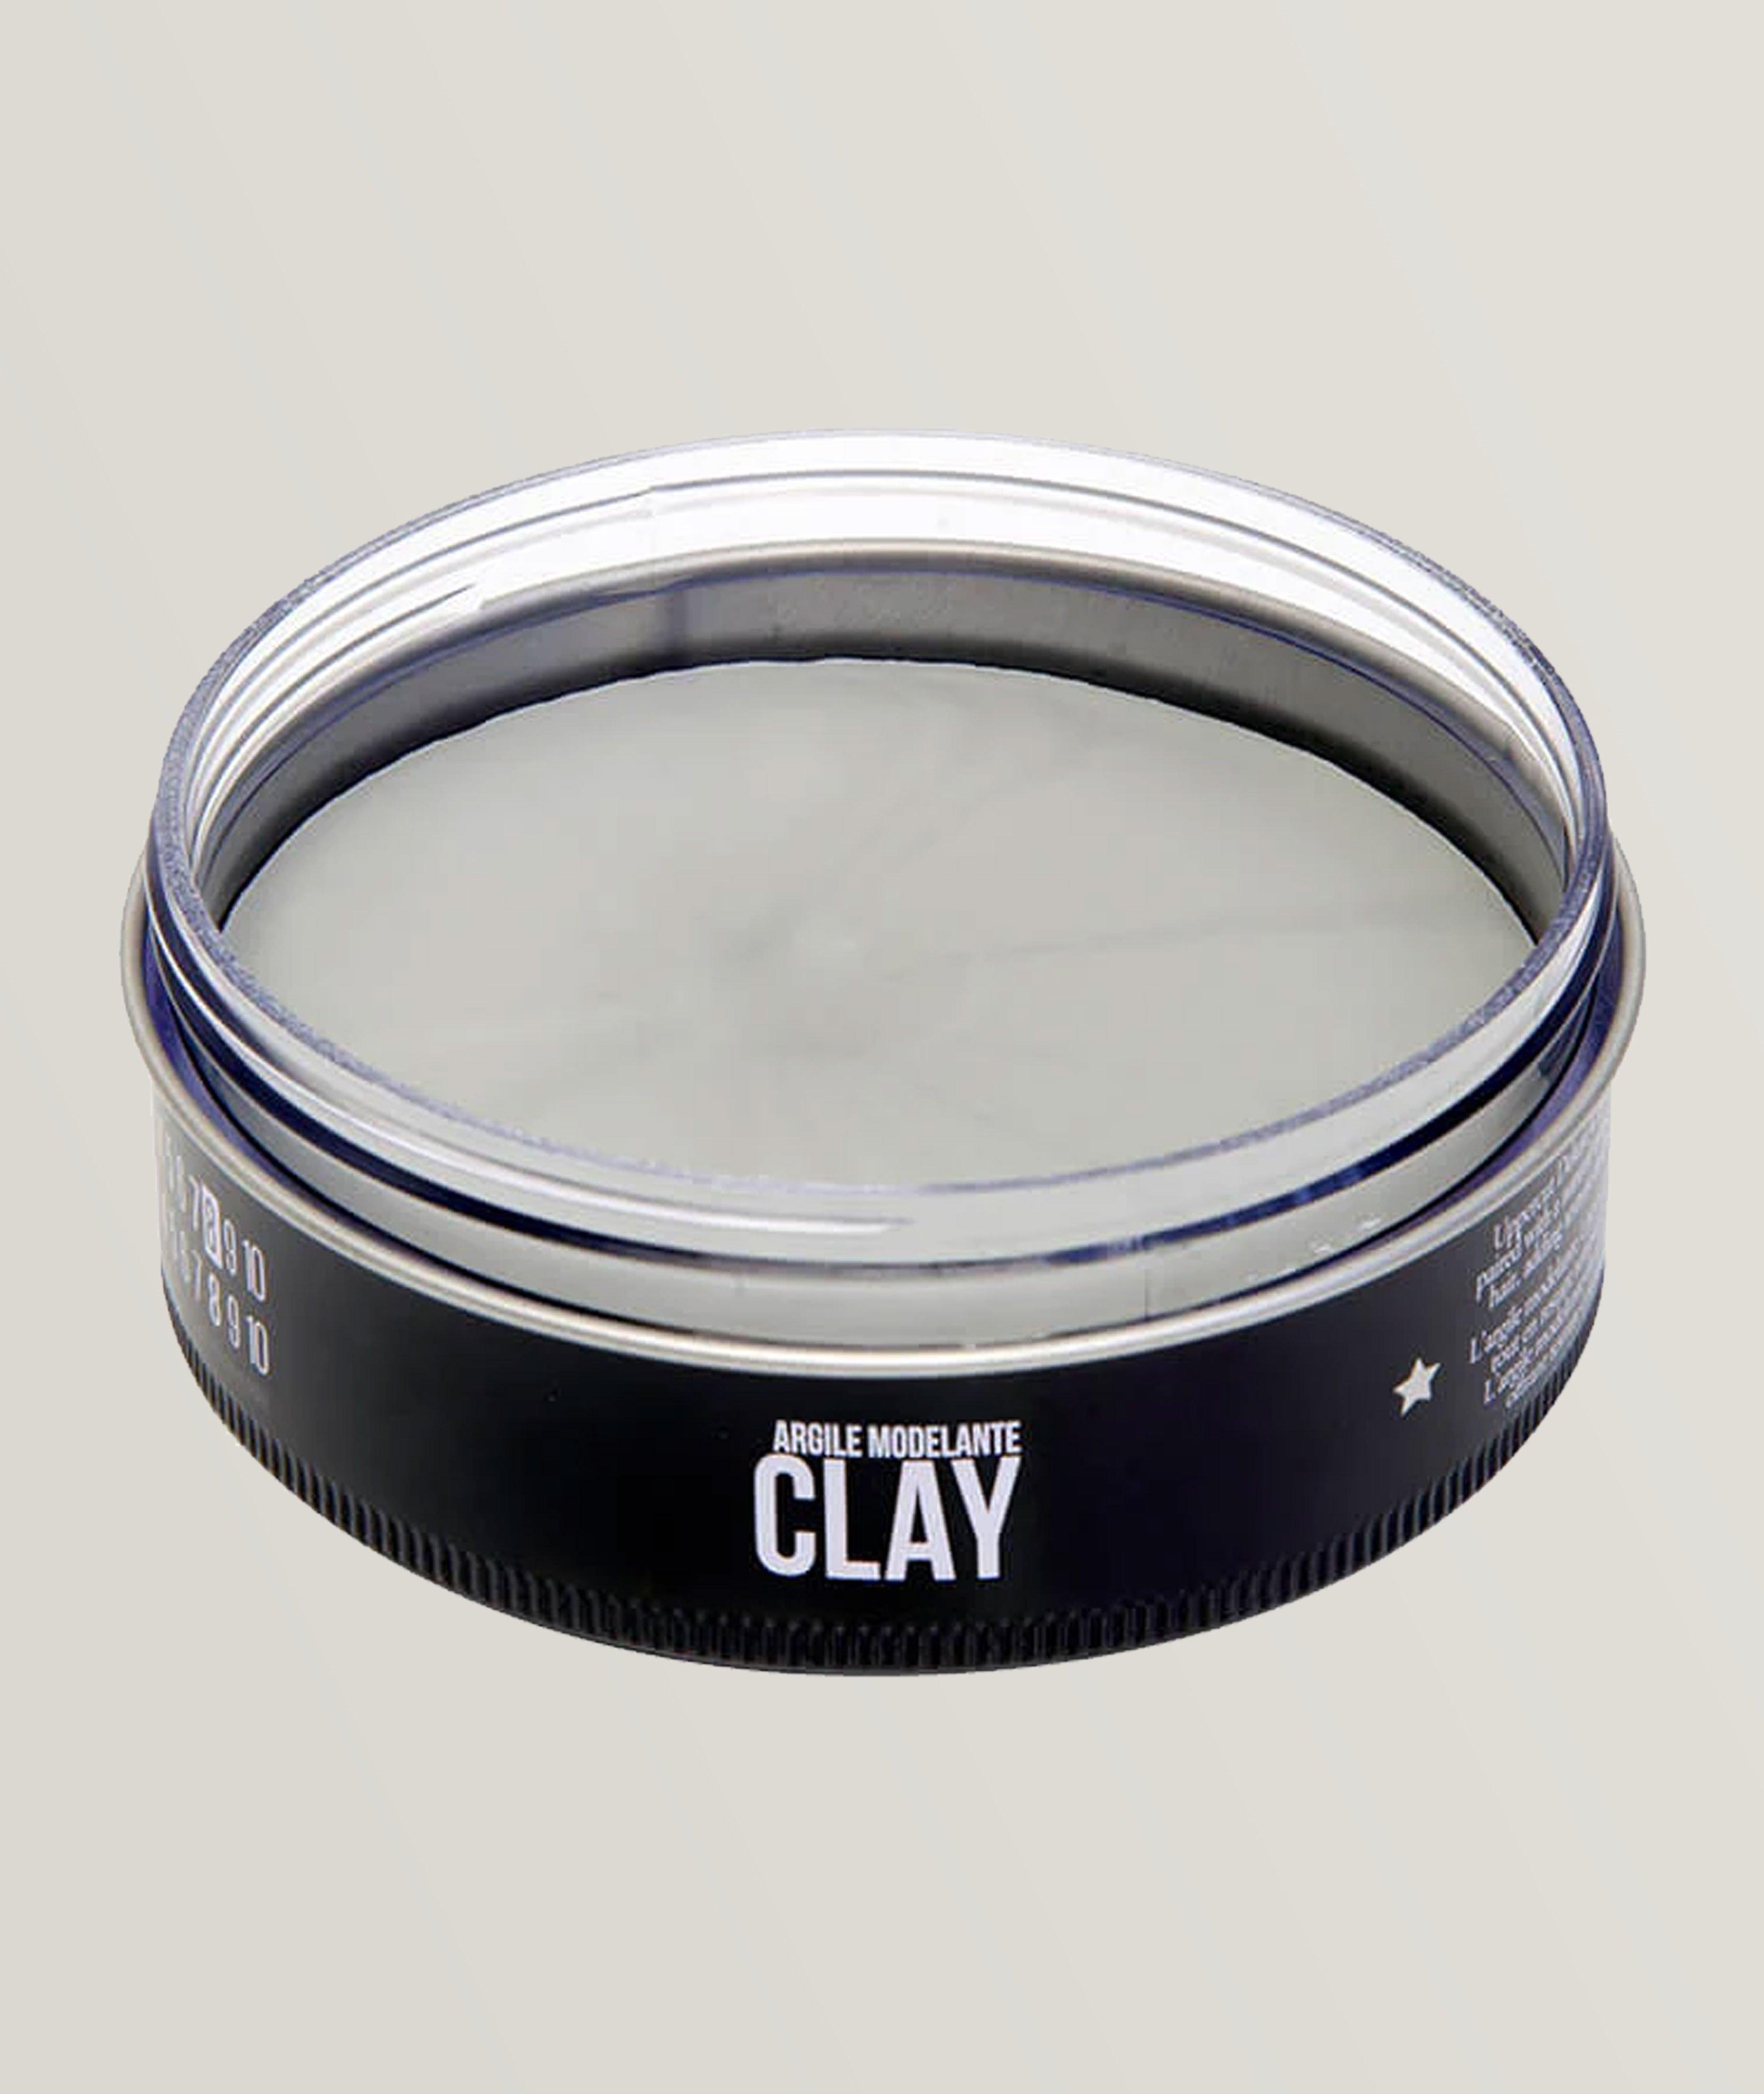 Clay 70 g image 2